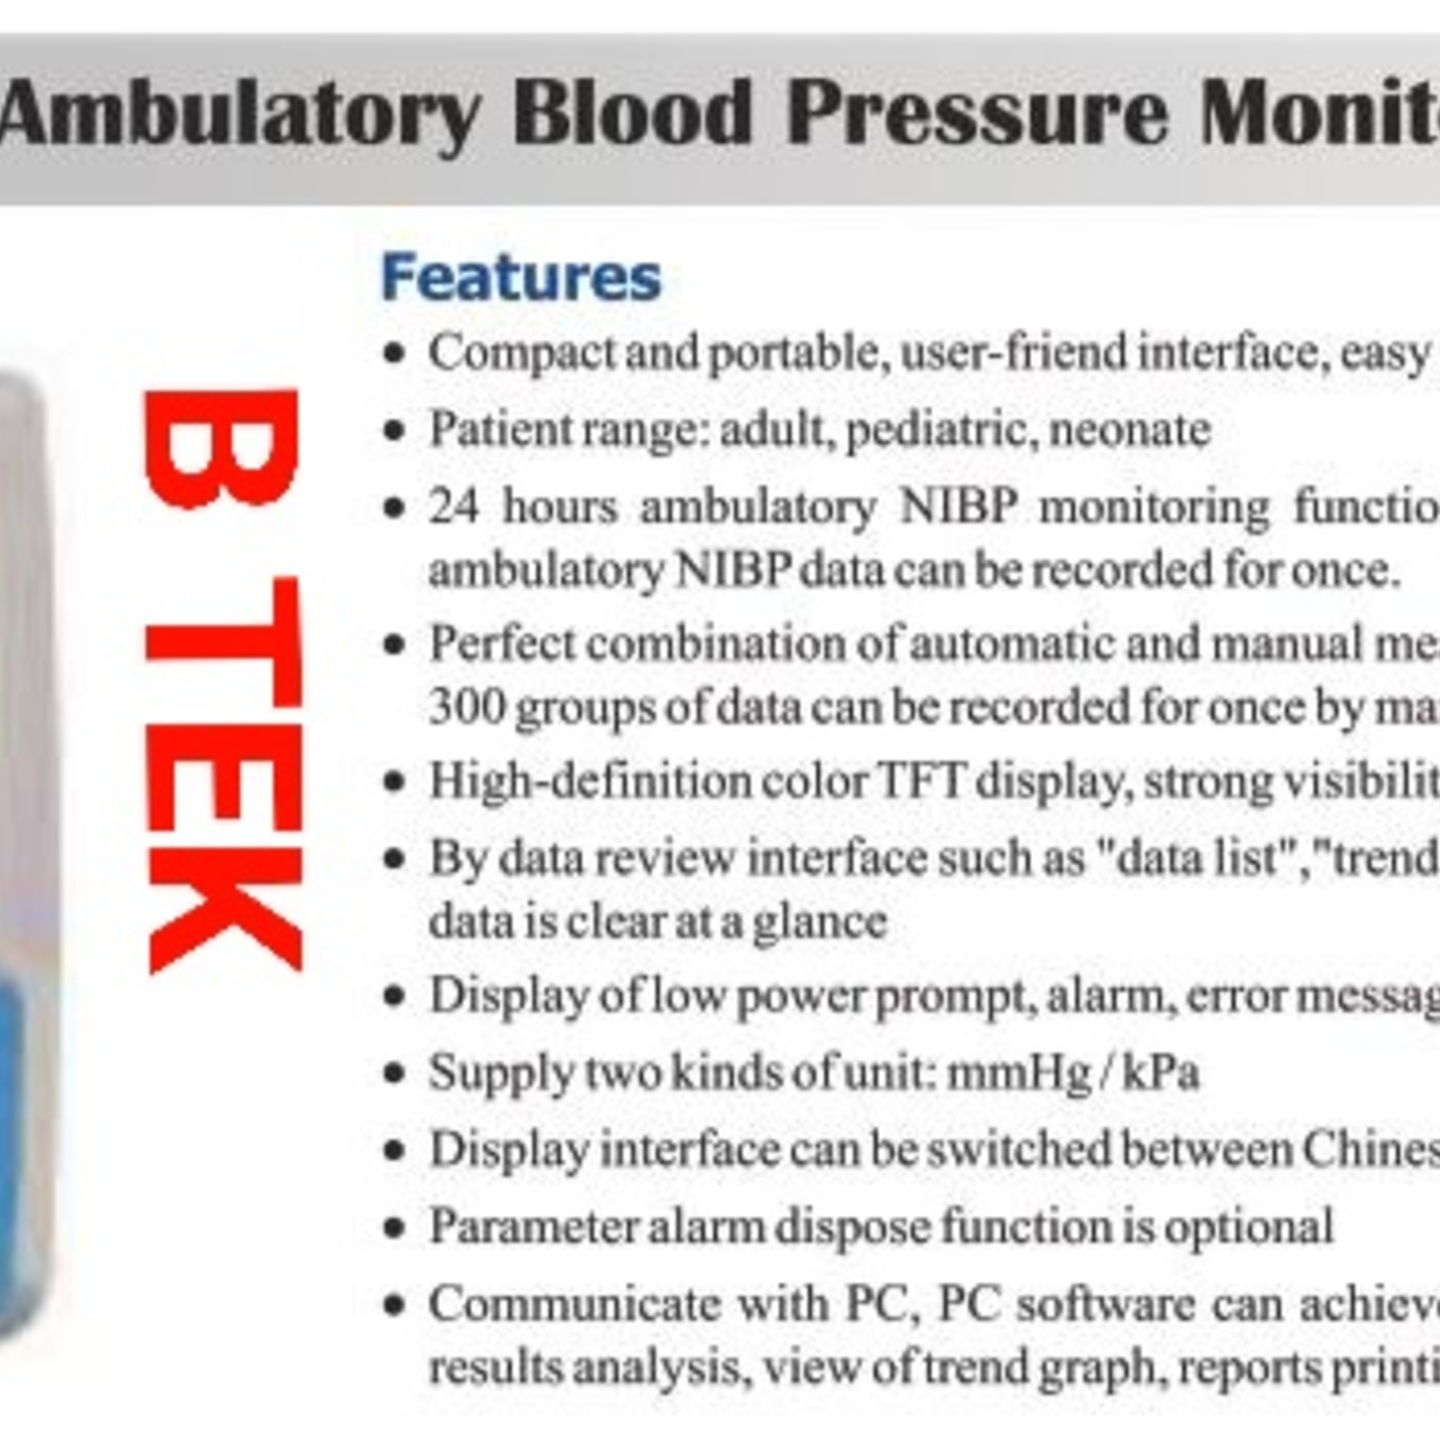 AMBULATORY BLOOD PRESSURE MONITOR WITH SPO2